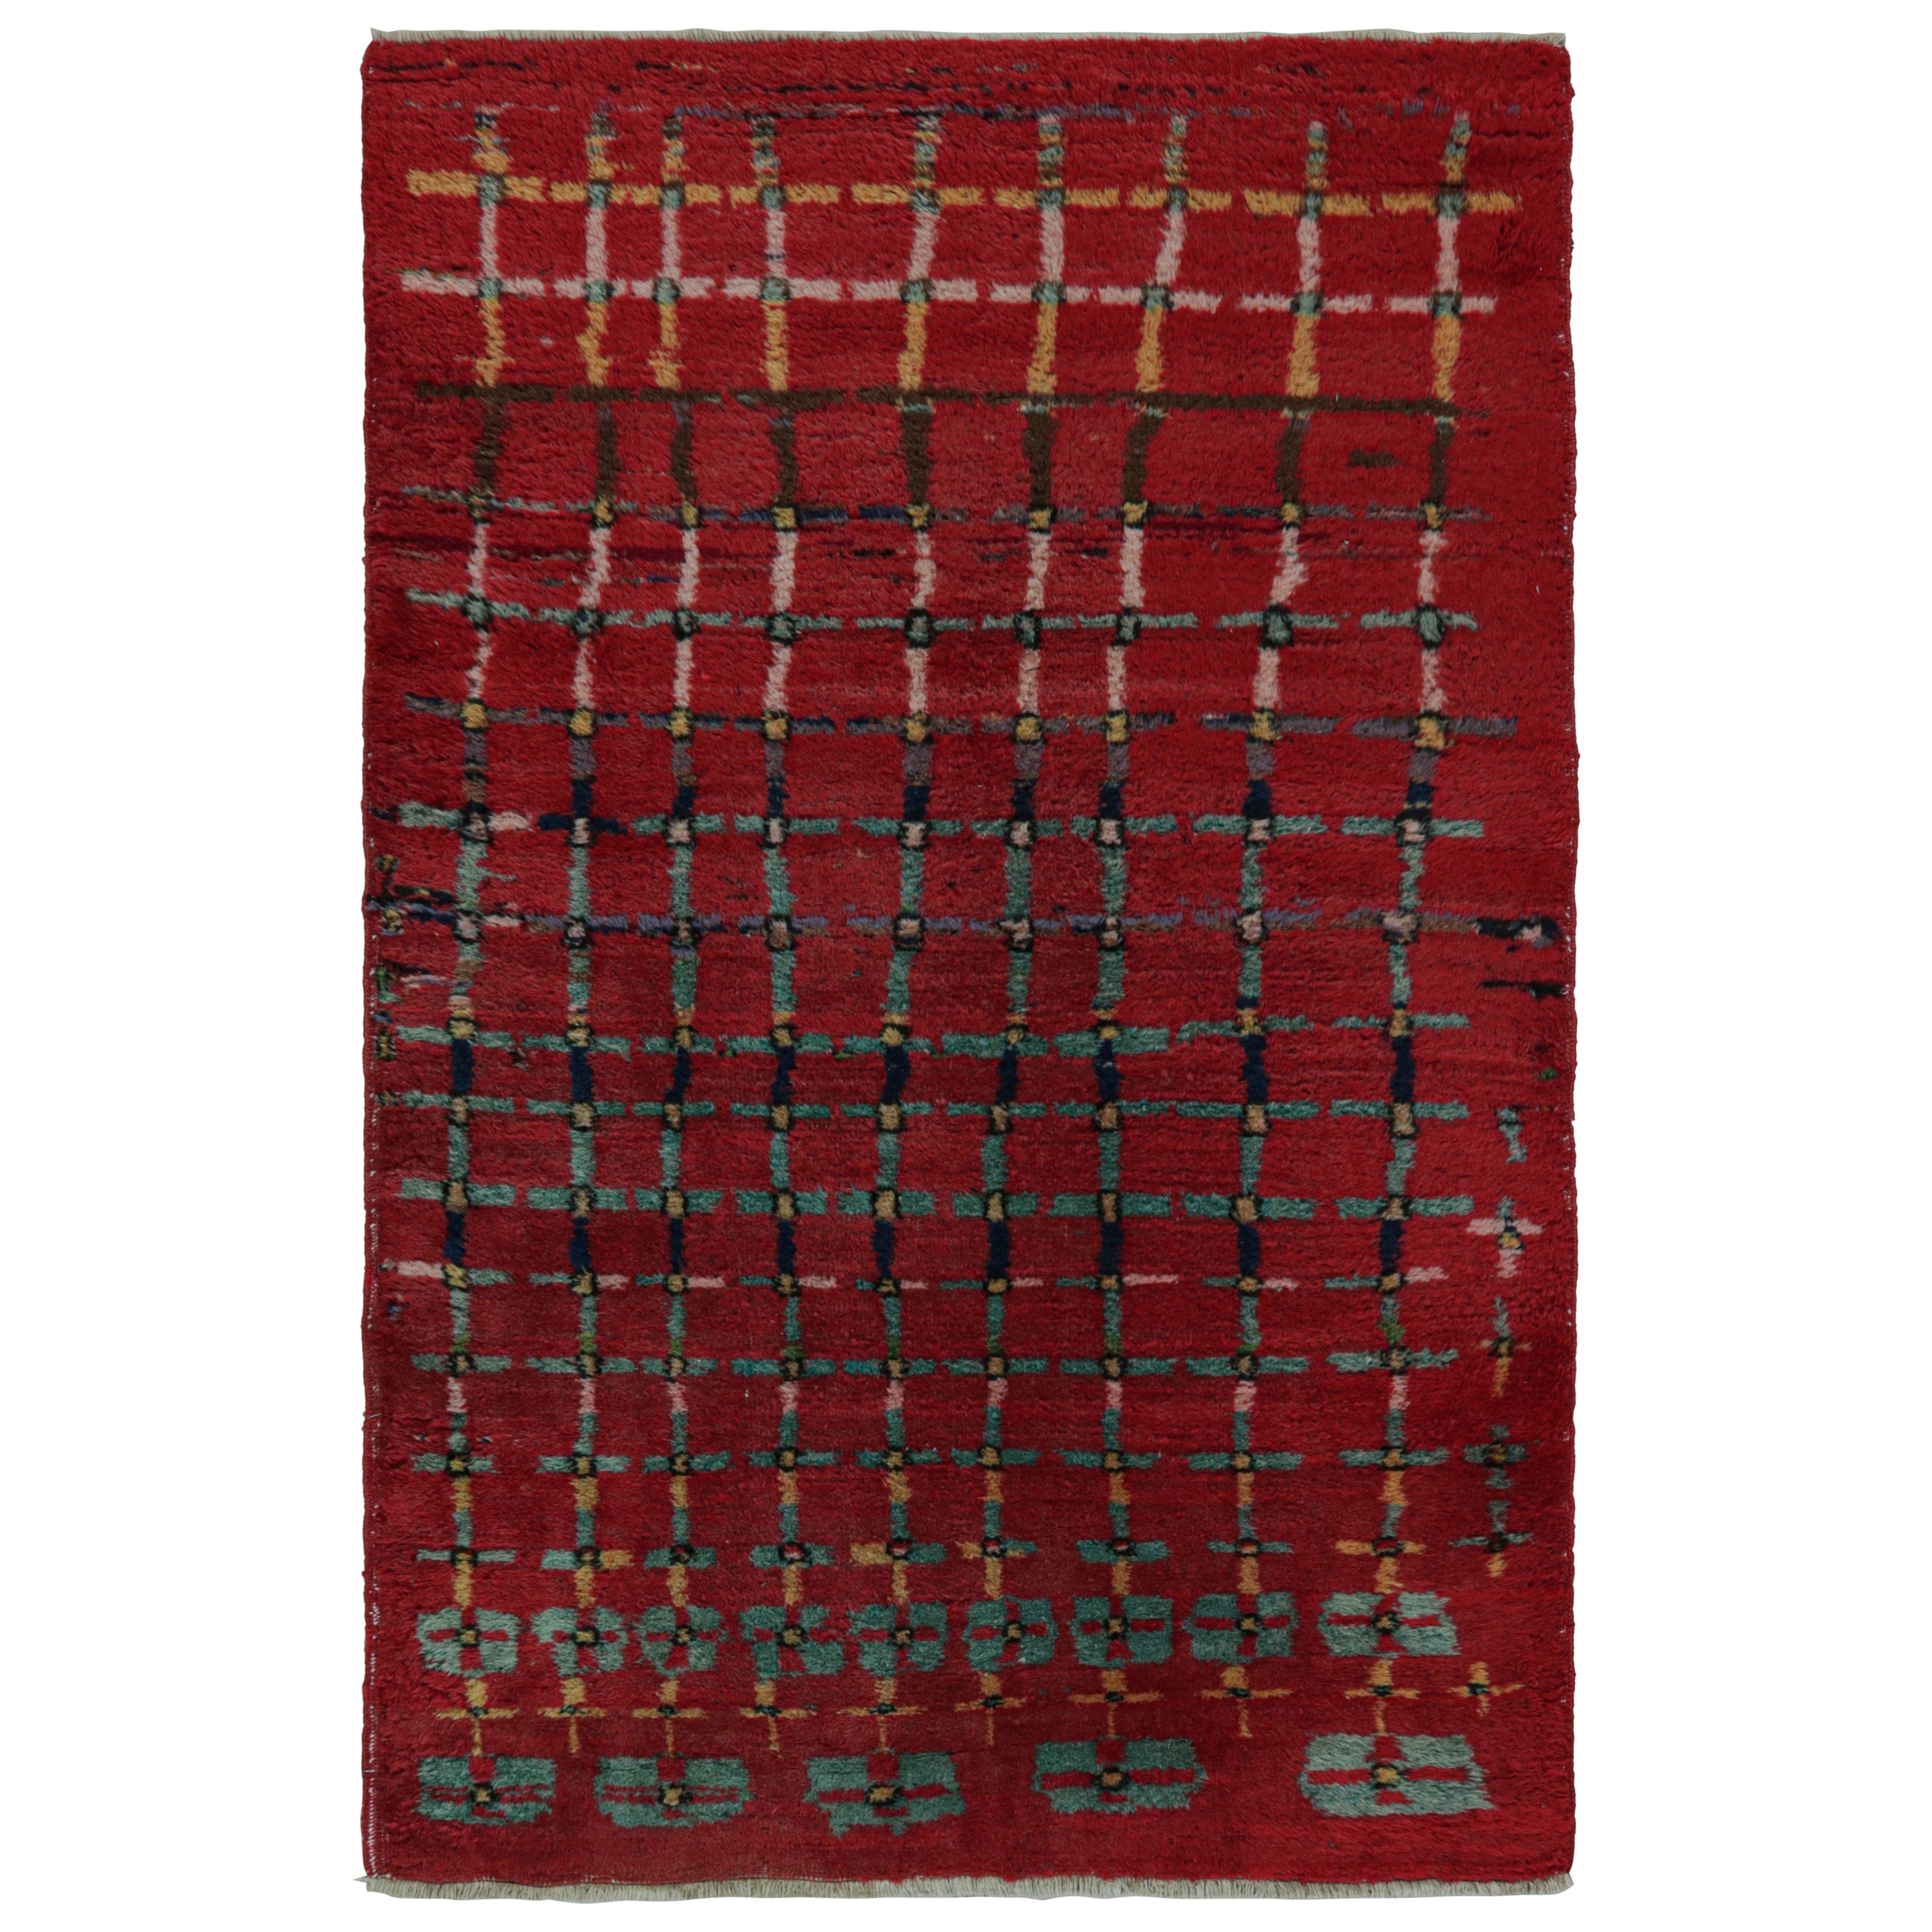 Vintage Zeki Müren Art Deco Rug in Red with Geometric patterns, from Rug & Kilim For Sale